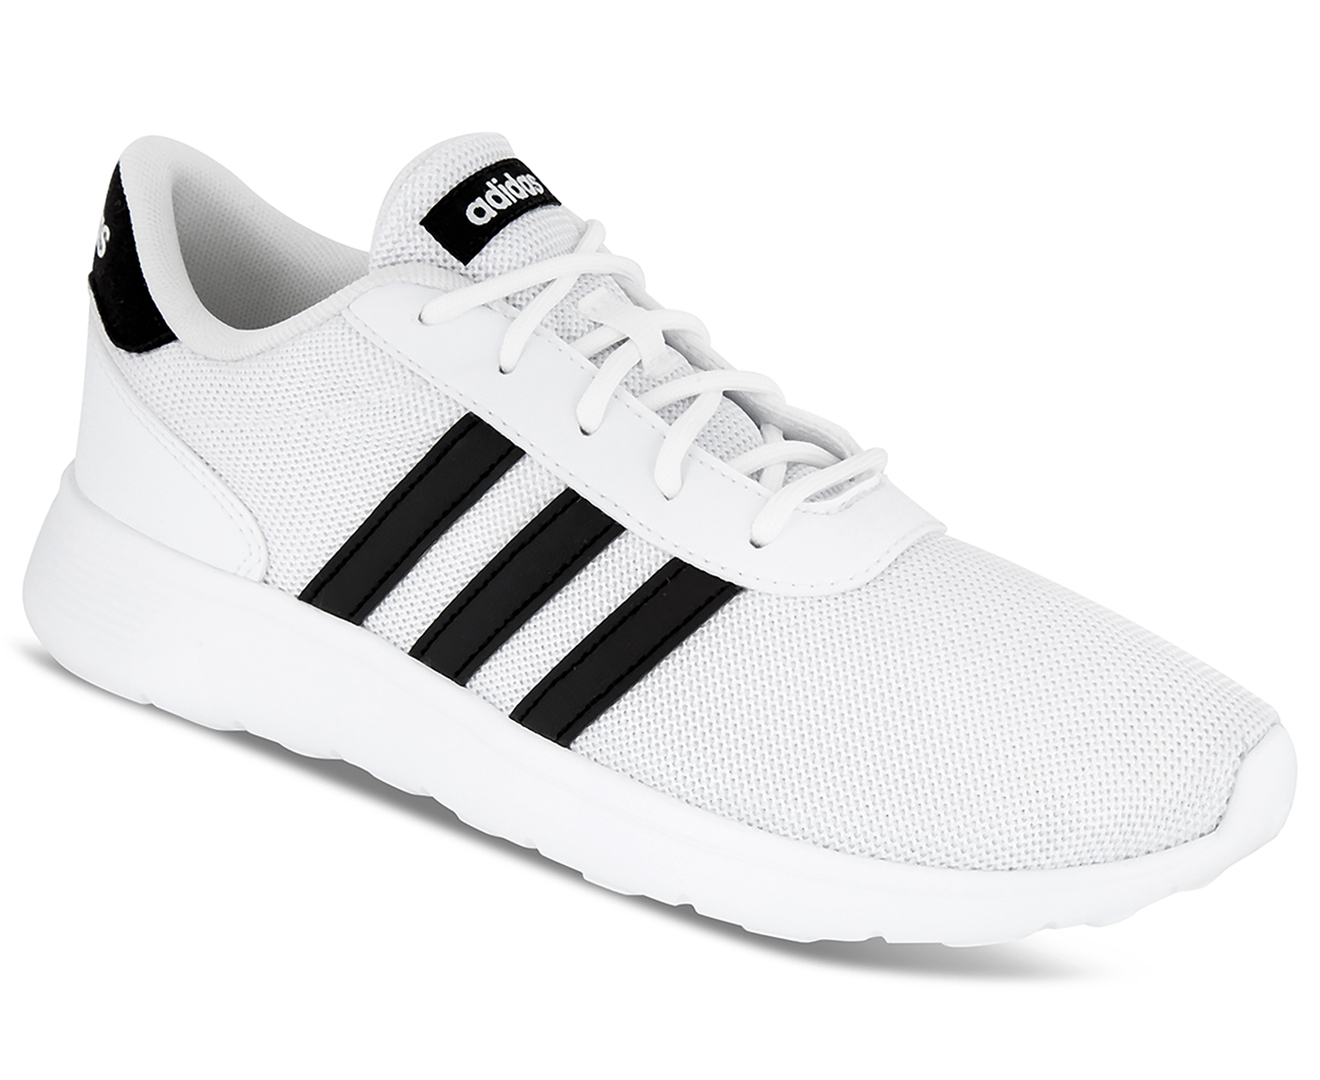 Adidas Women's Lite Racer Shoe - White/Core Black/White | Catch.co.nz